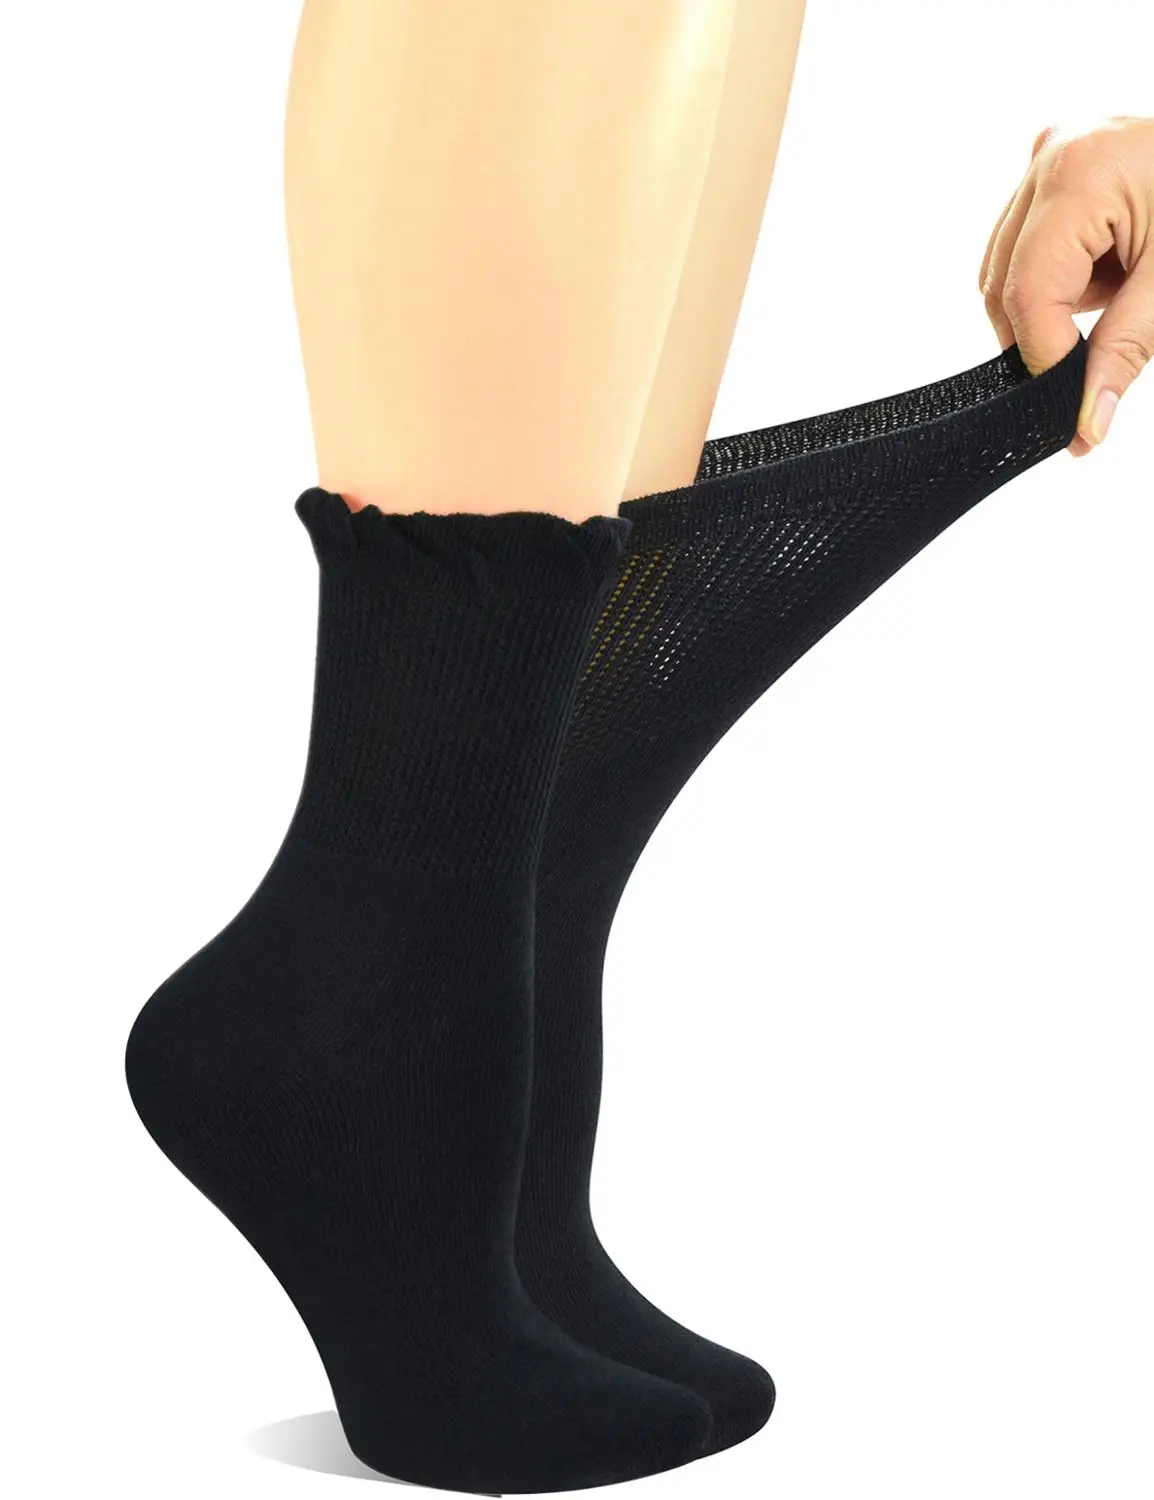 Yomandamor Mens 5 Pairs Bamboo Dress Crew Socks with Seamless Toe,Size 6-11 UK 